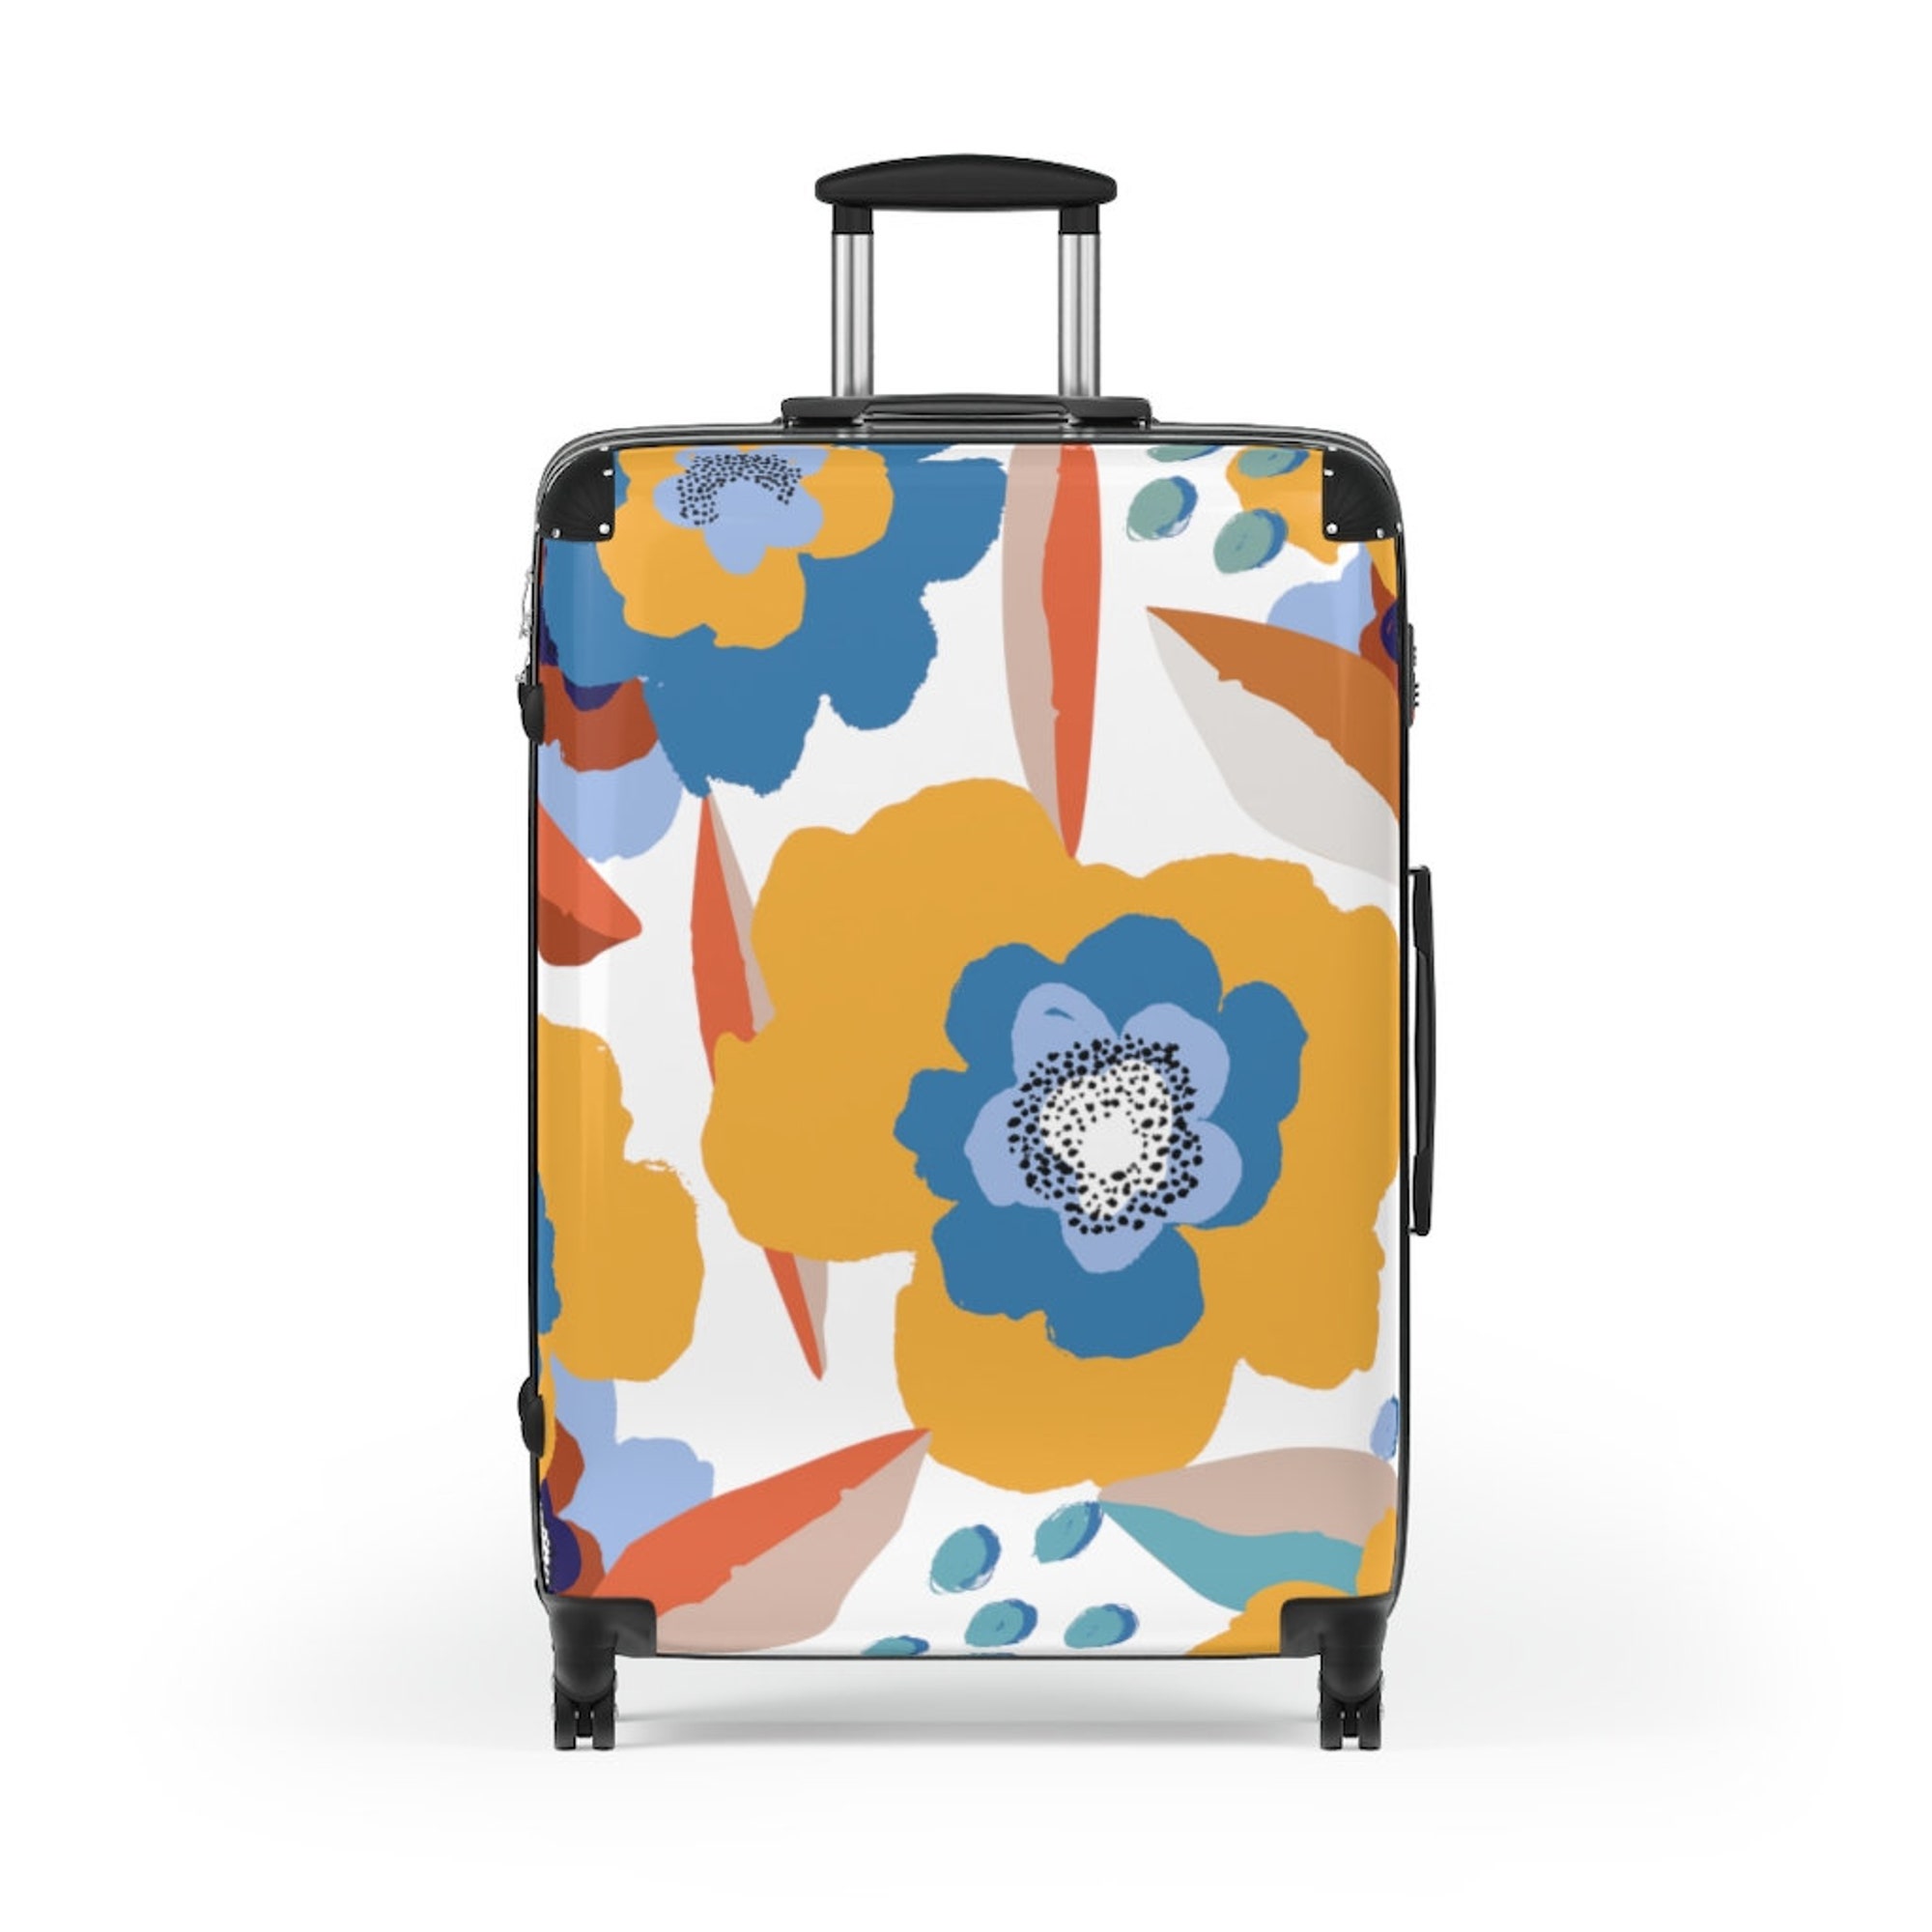 The Viola Suitcase